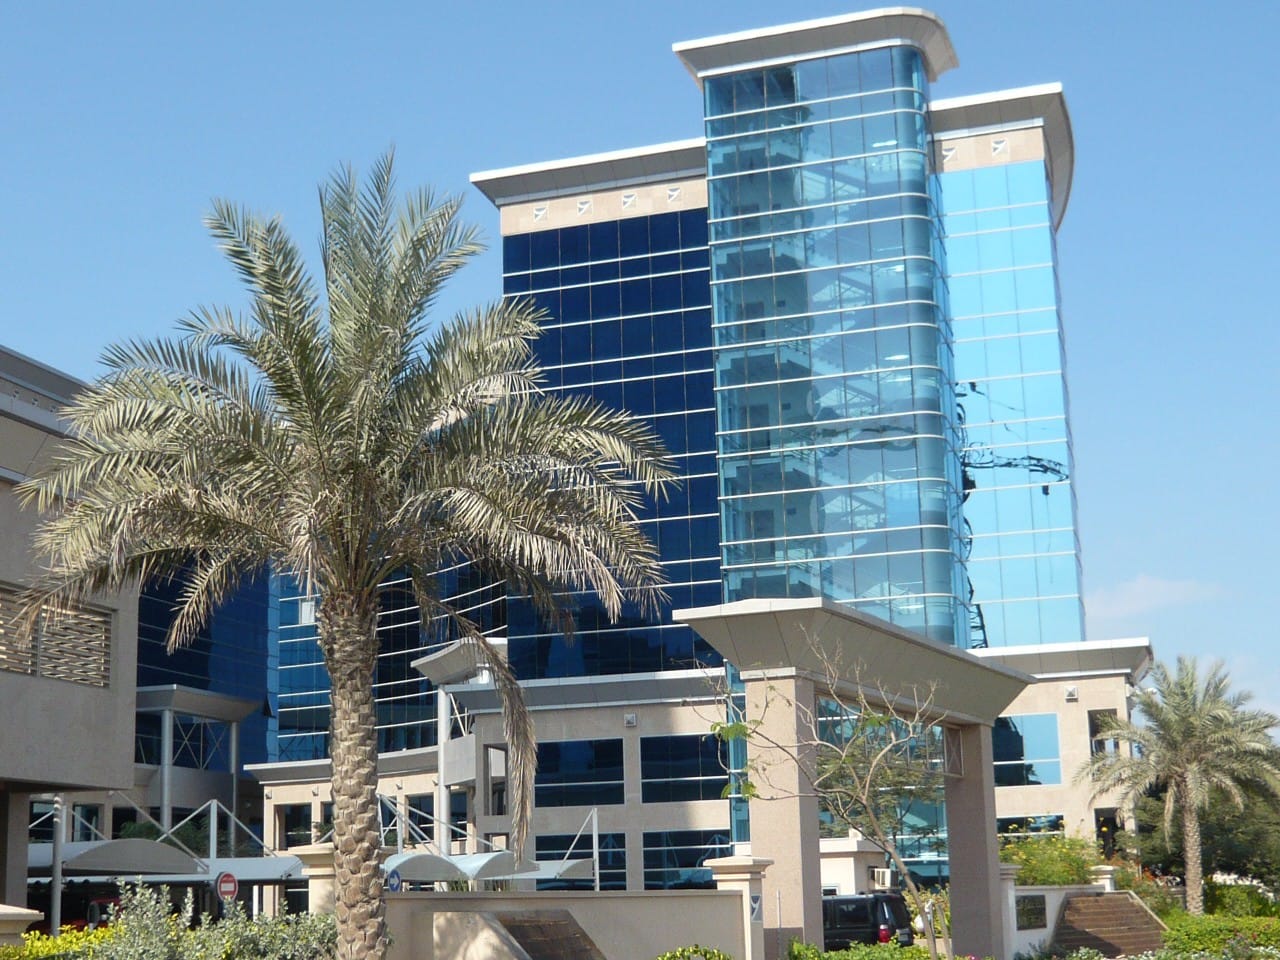 BUSINESS SETUP IN UAE FREE ZONES